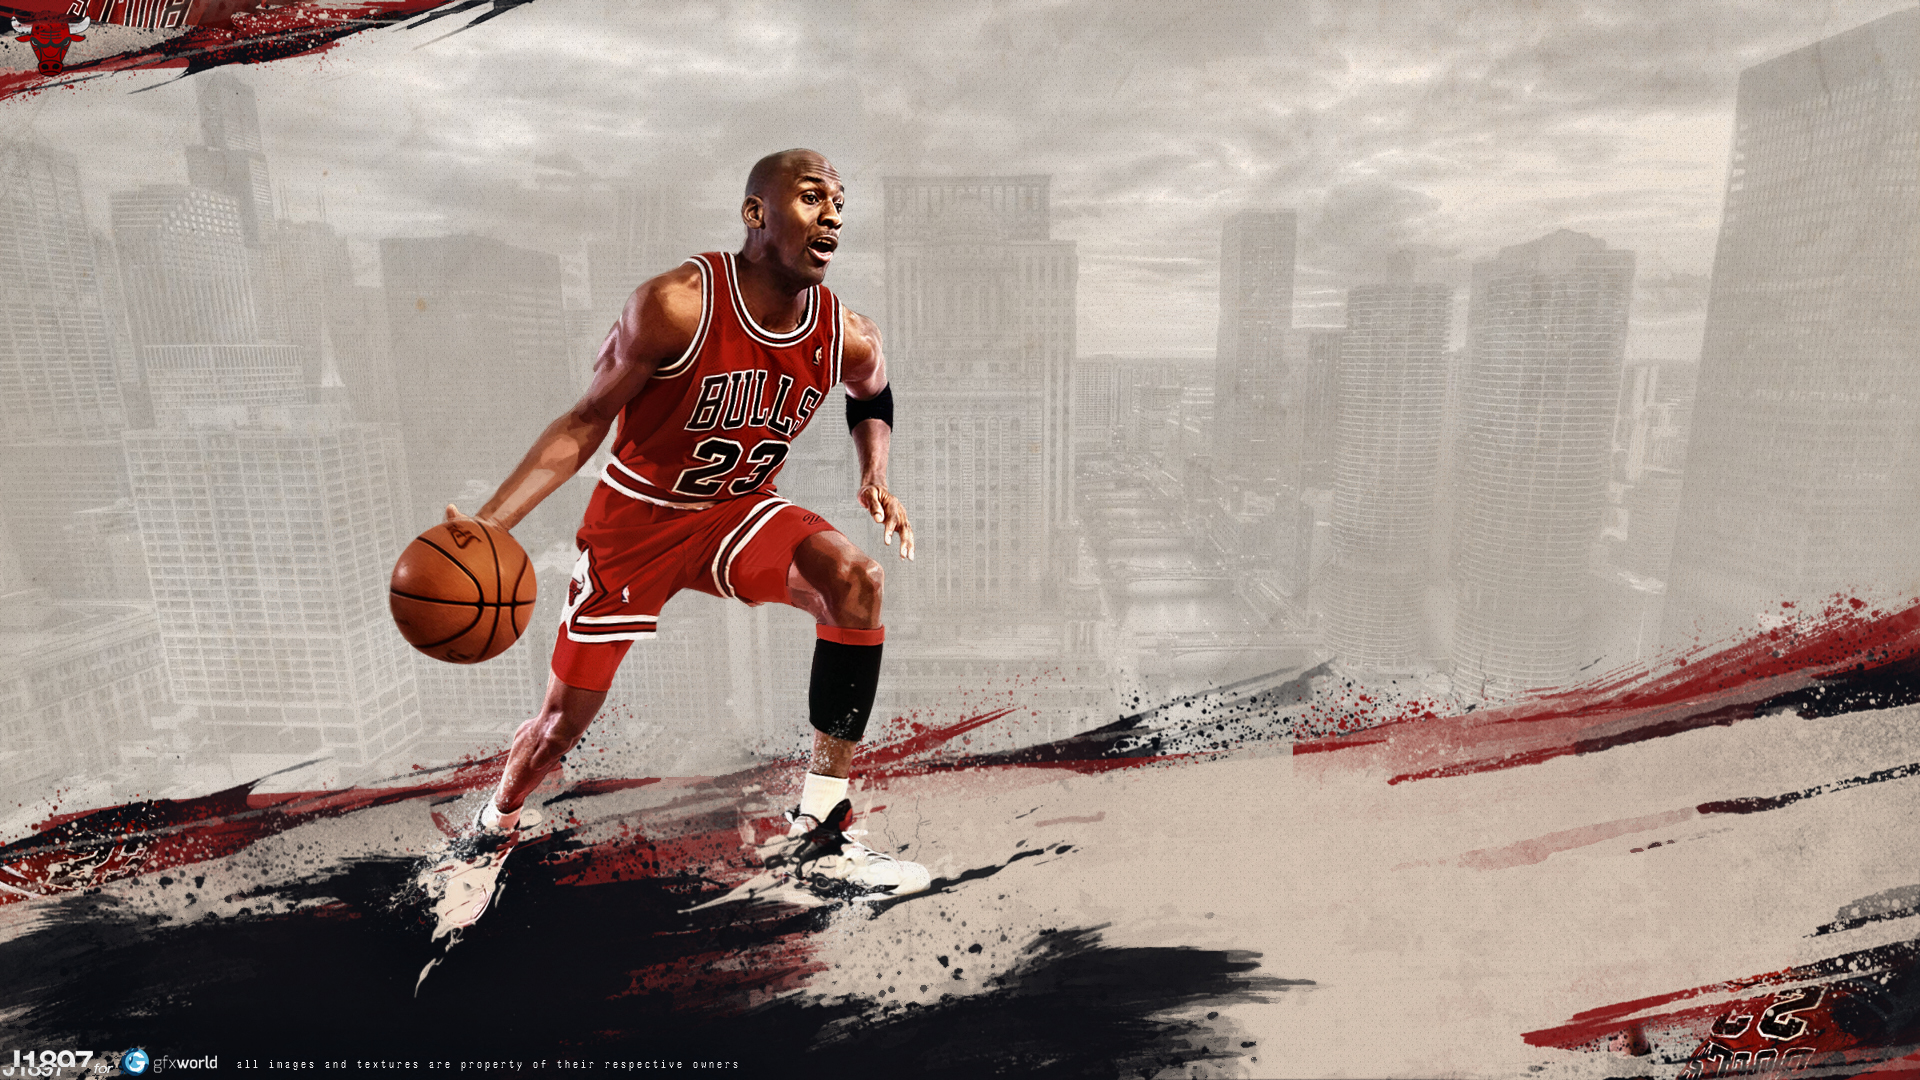 Michael Jordan Wallpapers Hd Download Free Pixelstalk Net. 